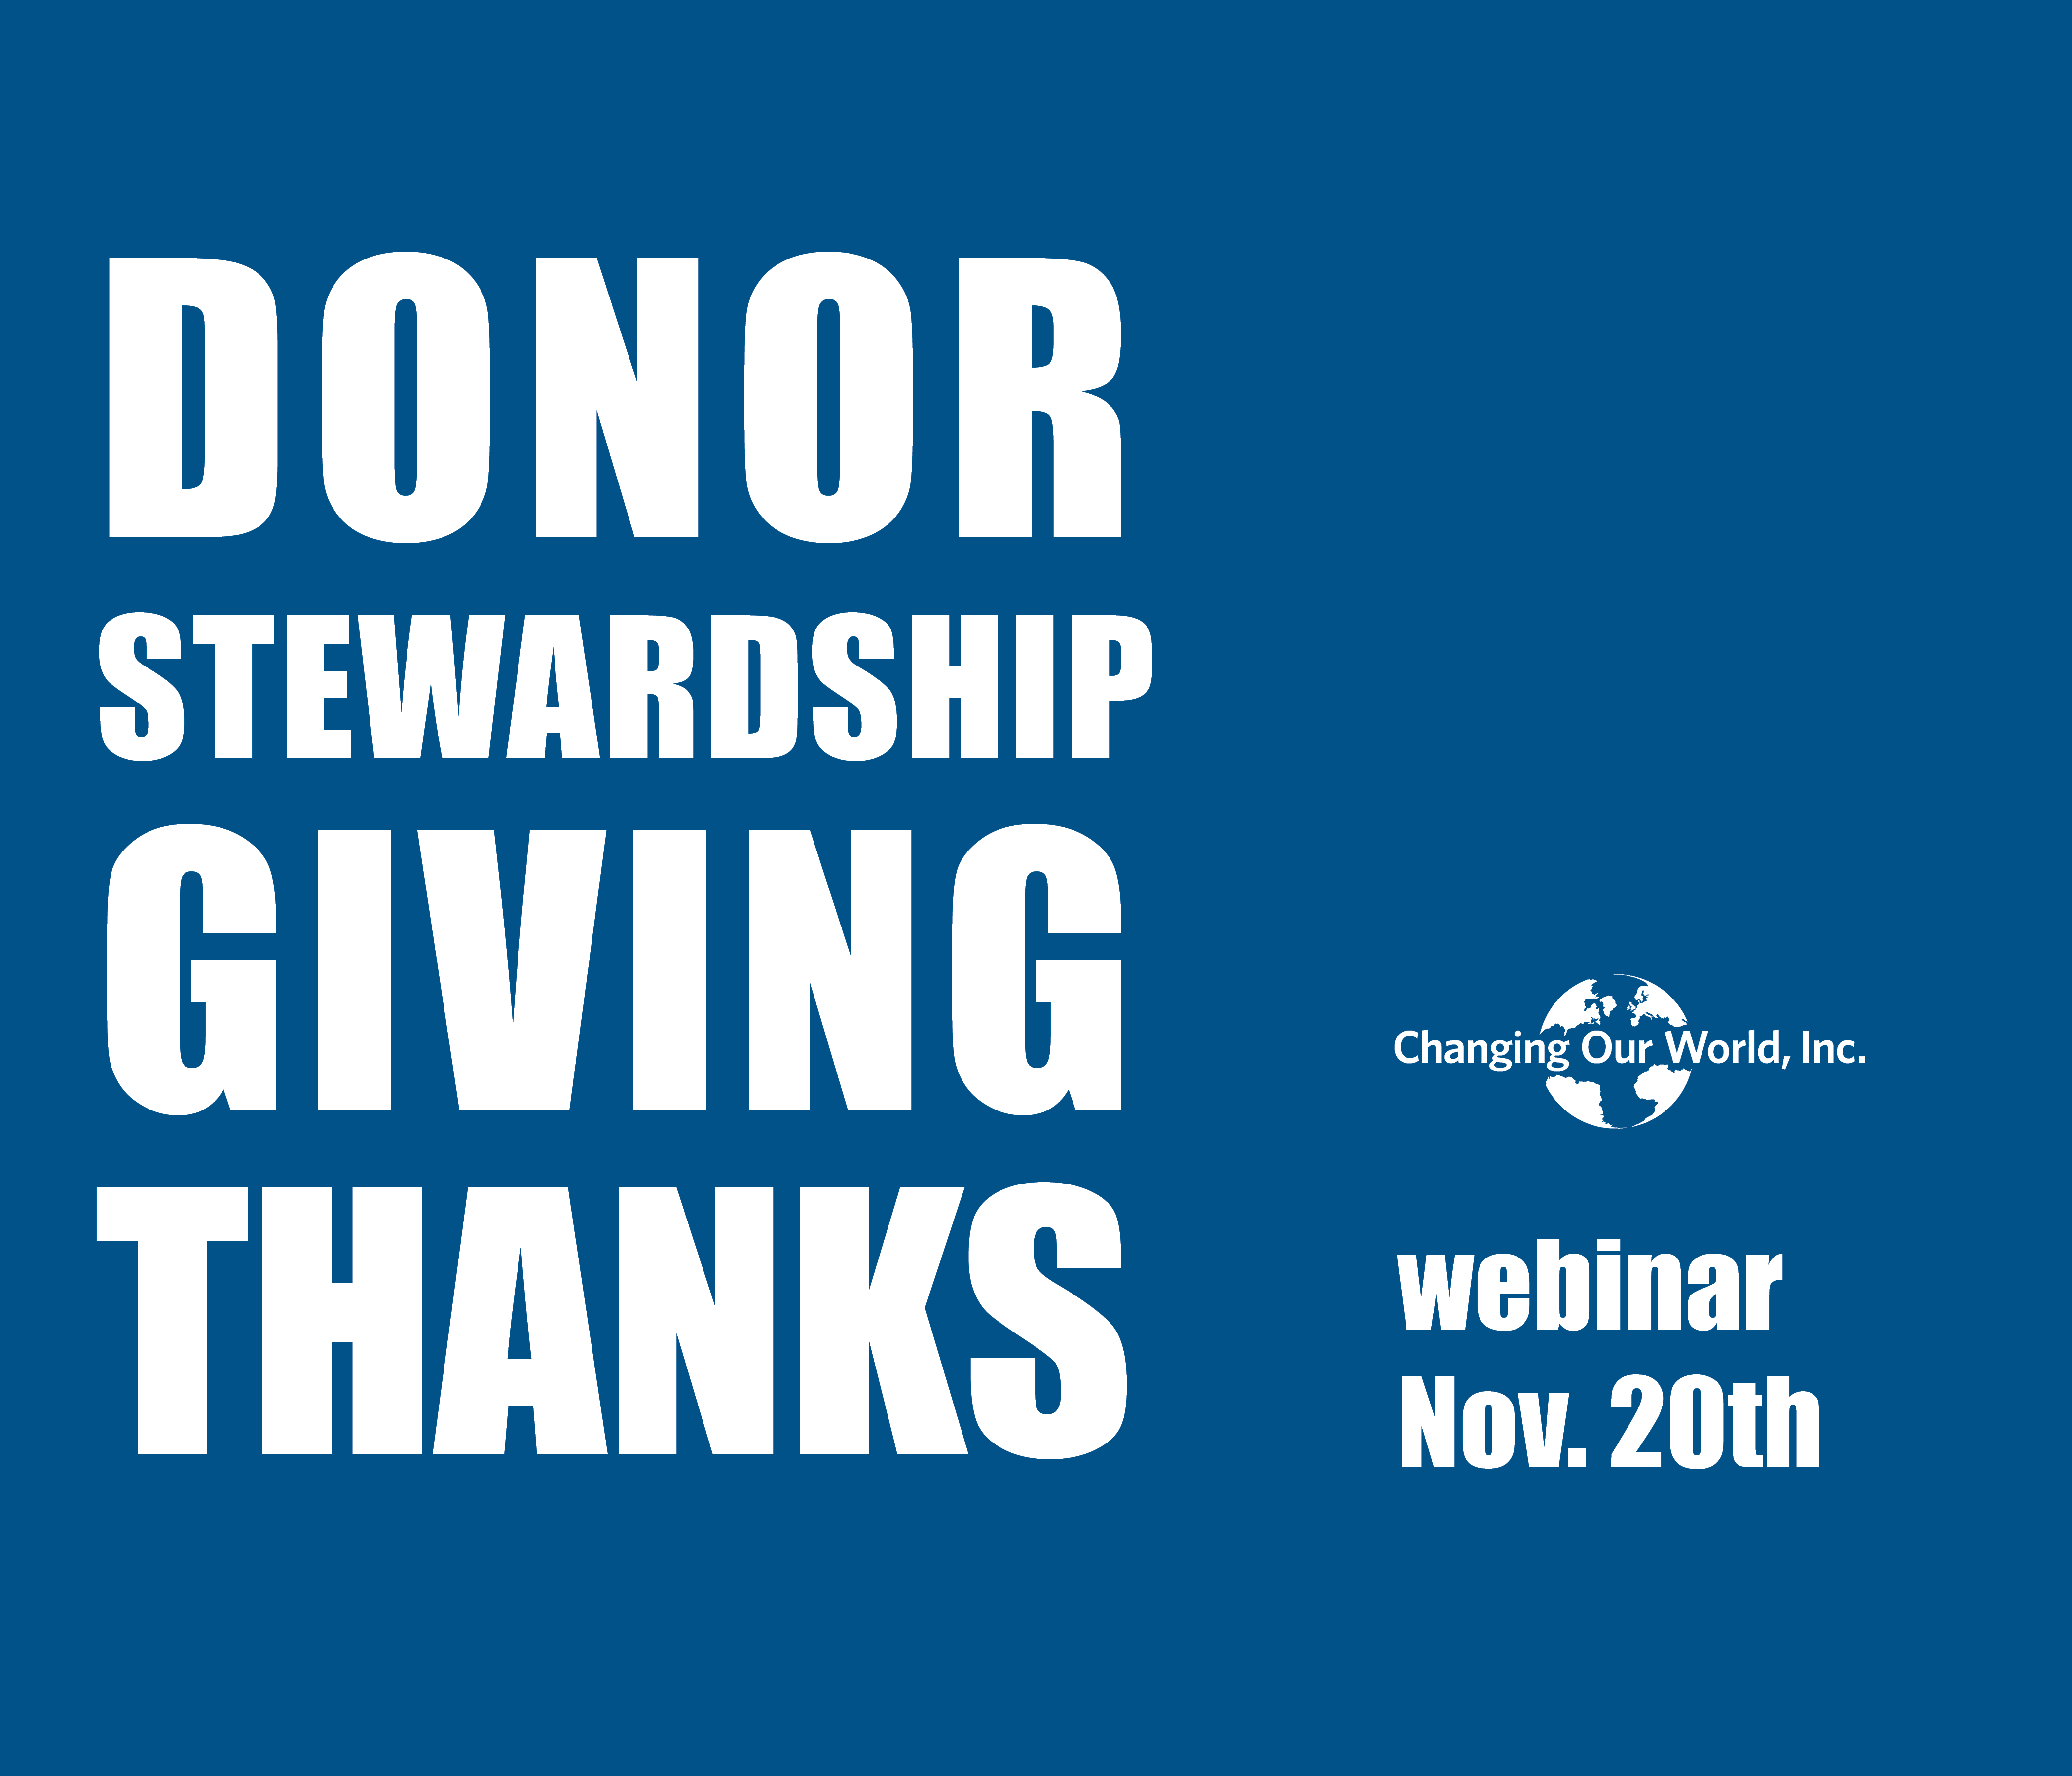 Donor stewardship giving thanks webinar.